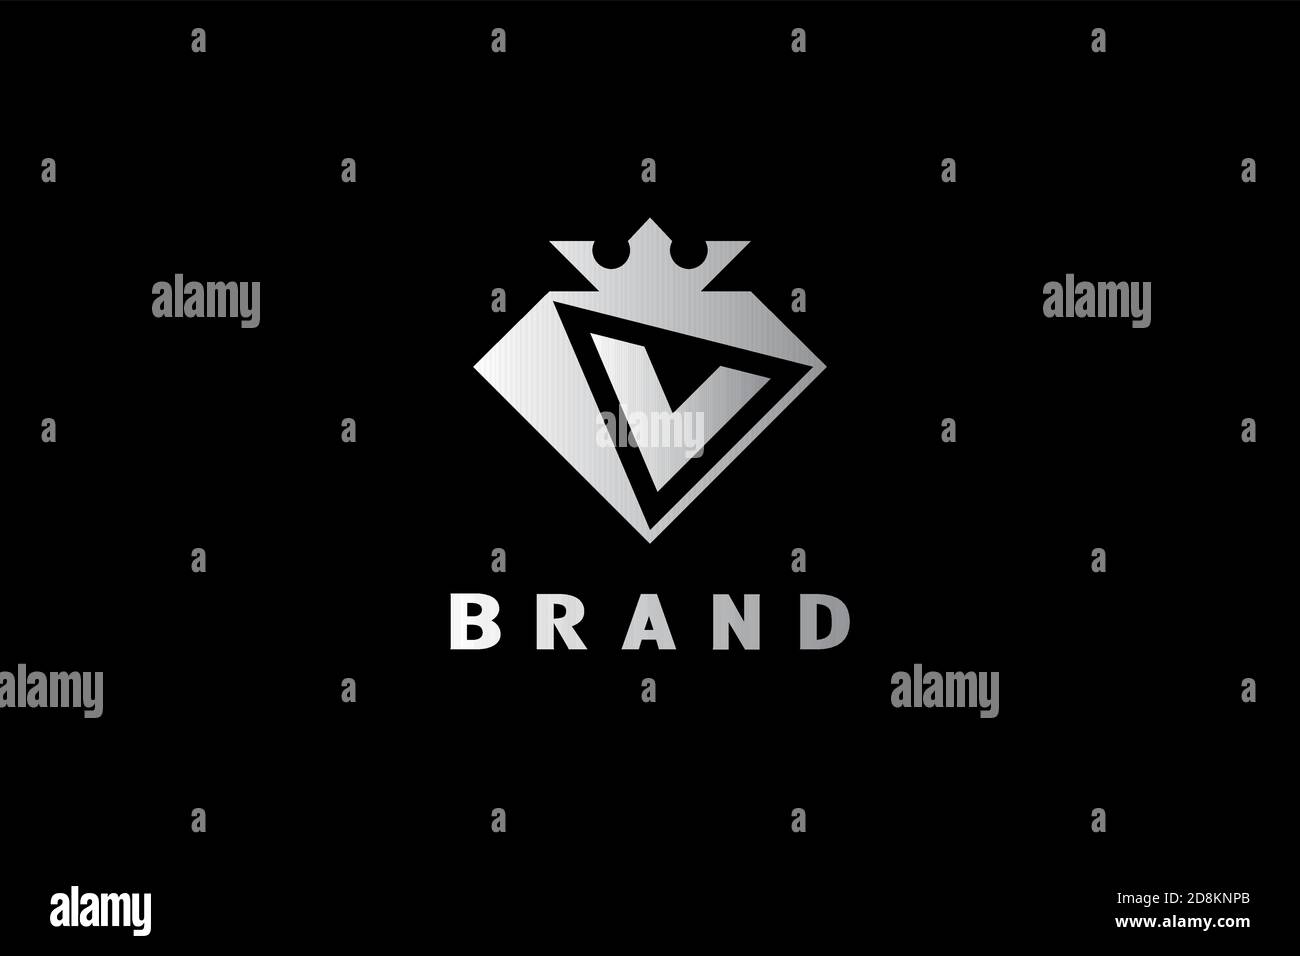 brand with v